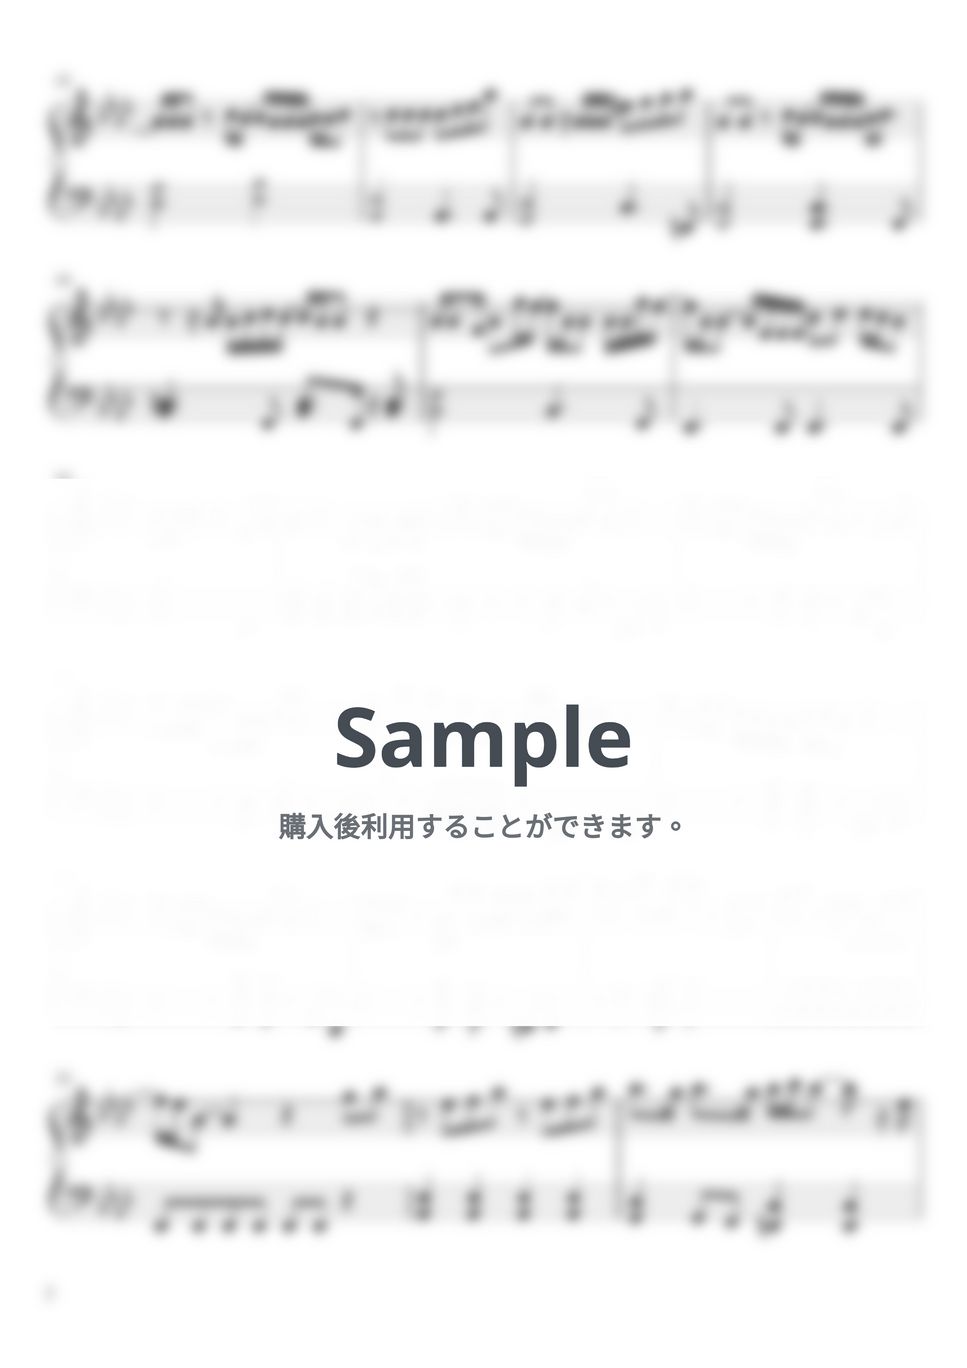 Official髭男dism - Pretender (ピアノ初心者向け / short ver.) by Piano Lovers. jp